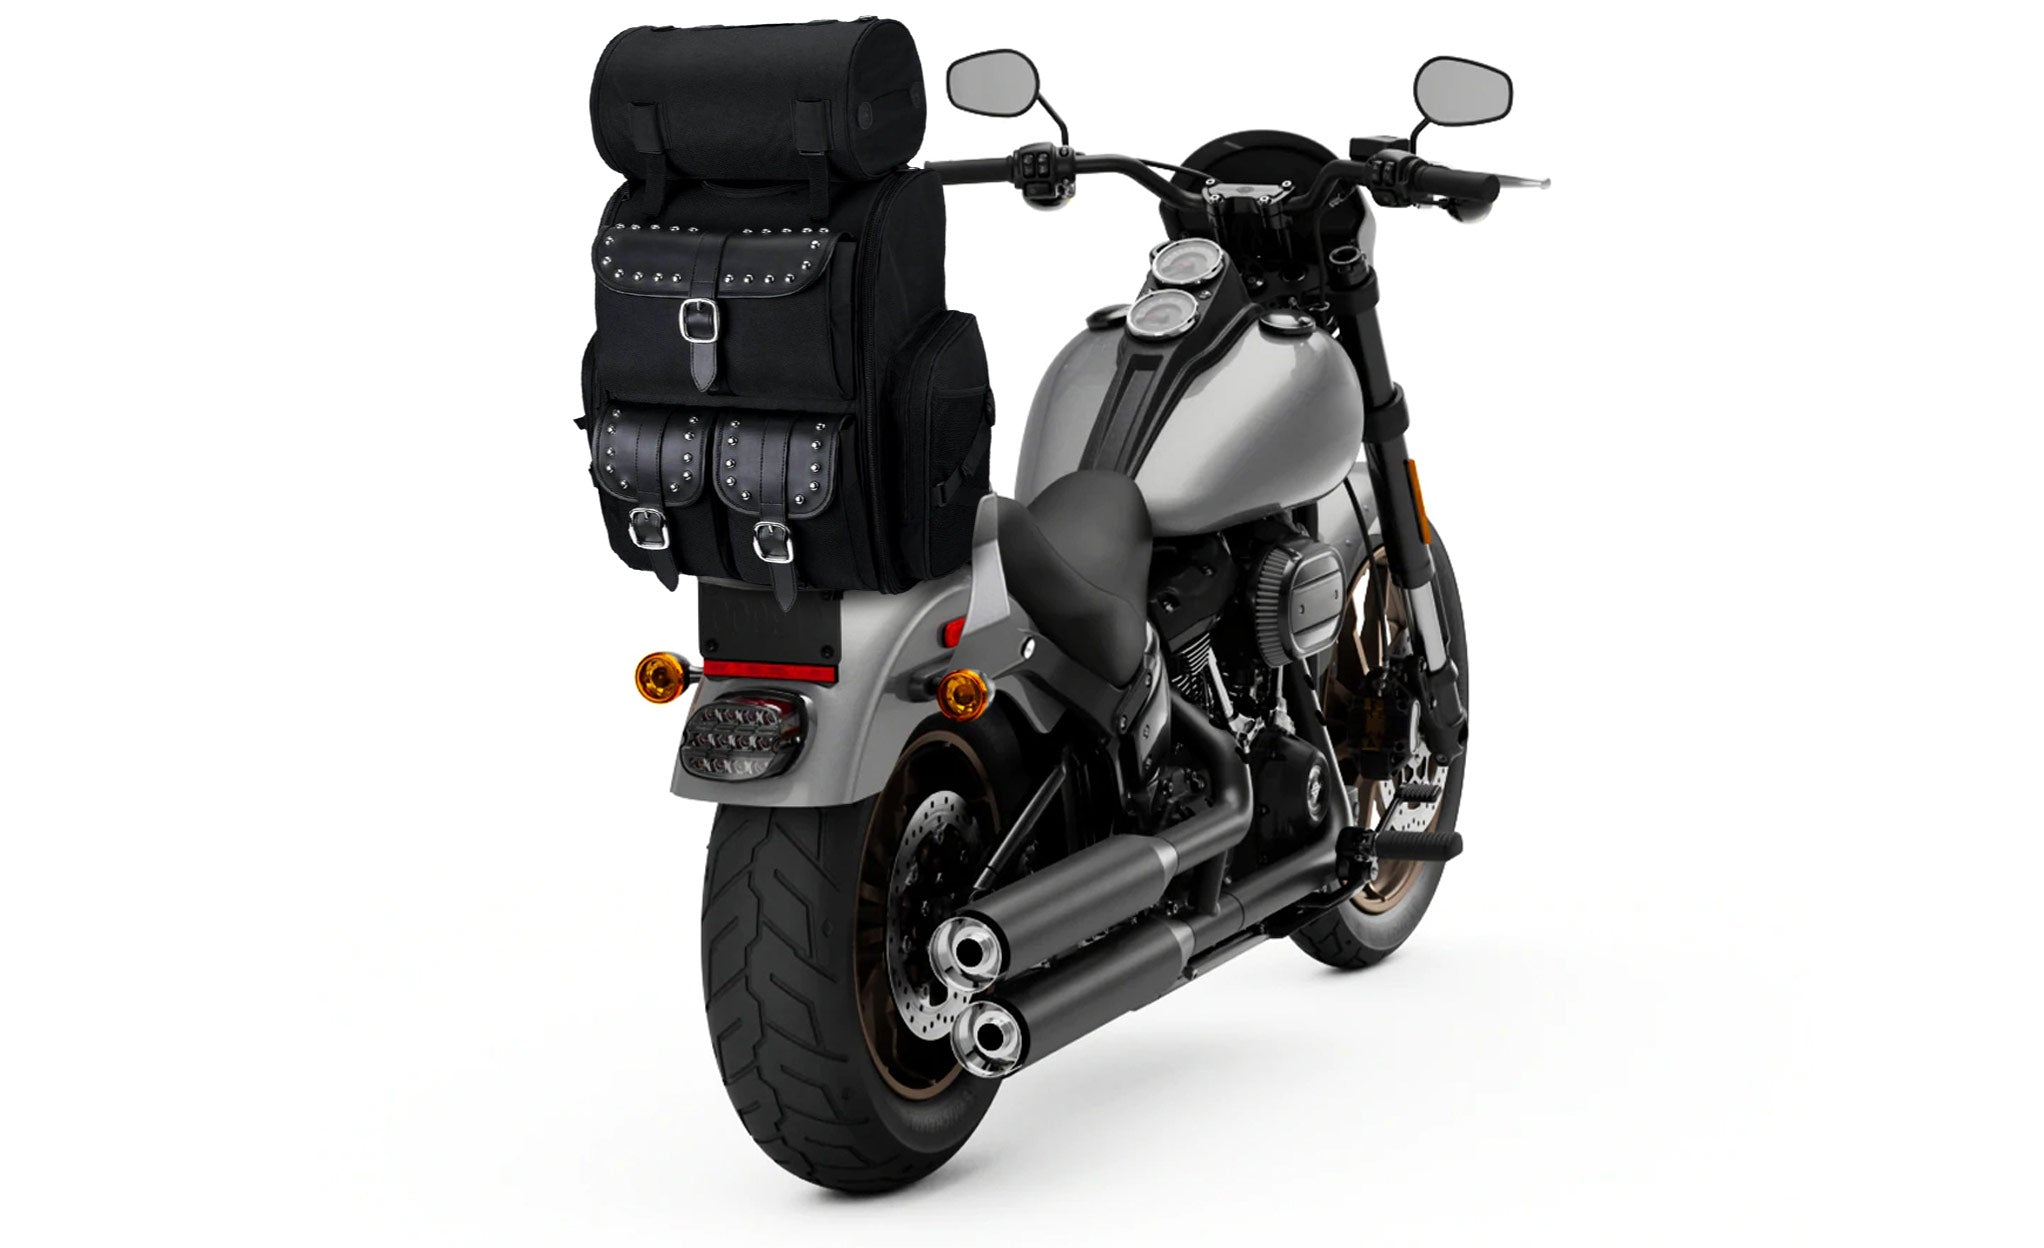 Viking Highway Extra Large Studded Kawasaki Motorcycle Sissy Bar Bag Bag on Bike View @expand